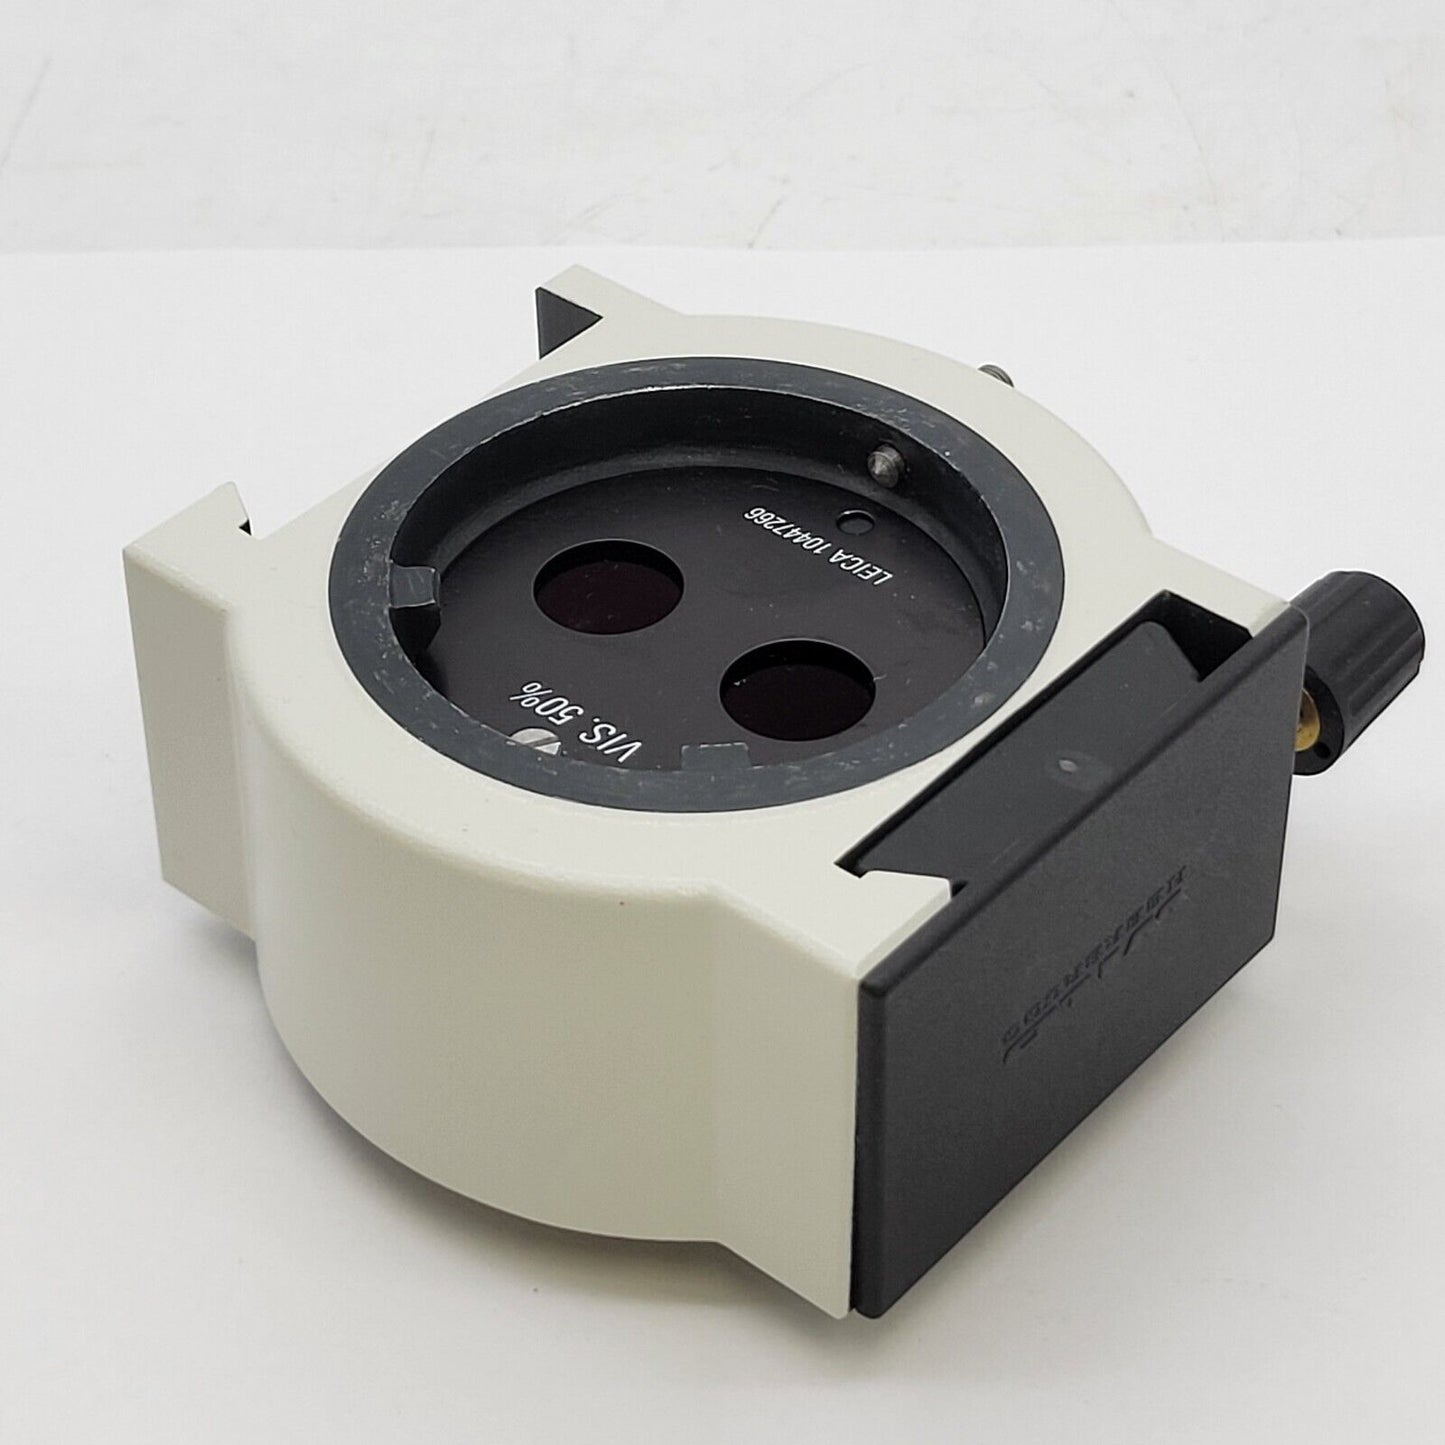 Leica Surgical Microscope Beam Splitter Vis 50% 10447266 - microscopemarketplace